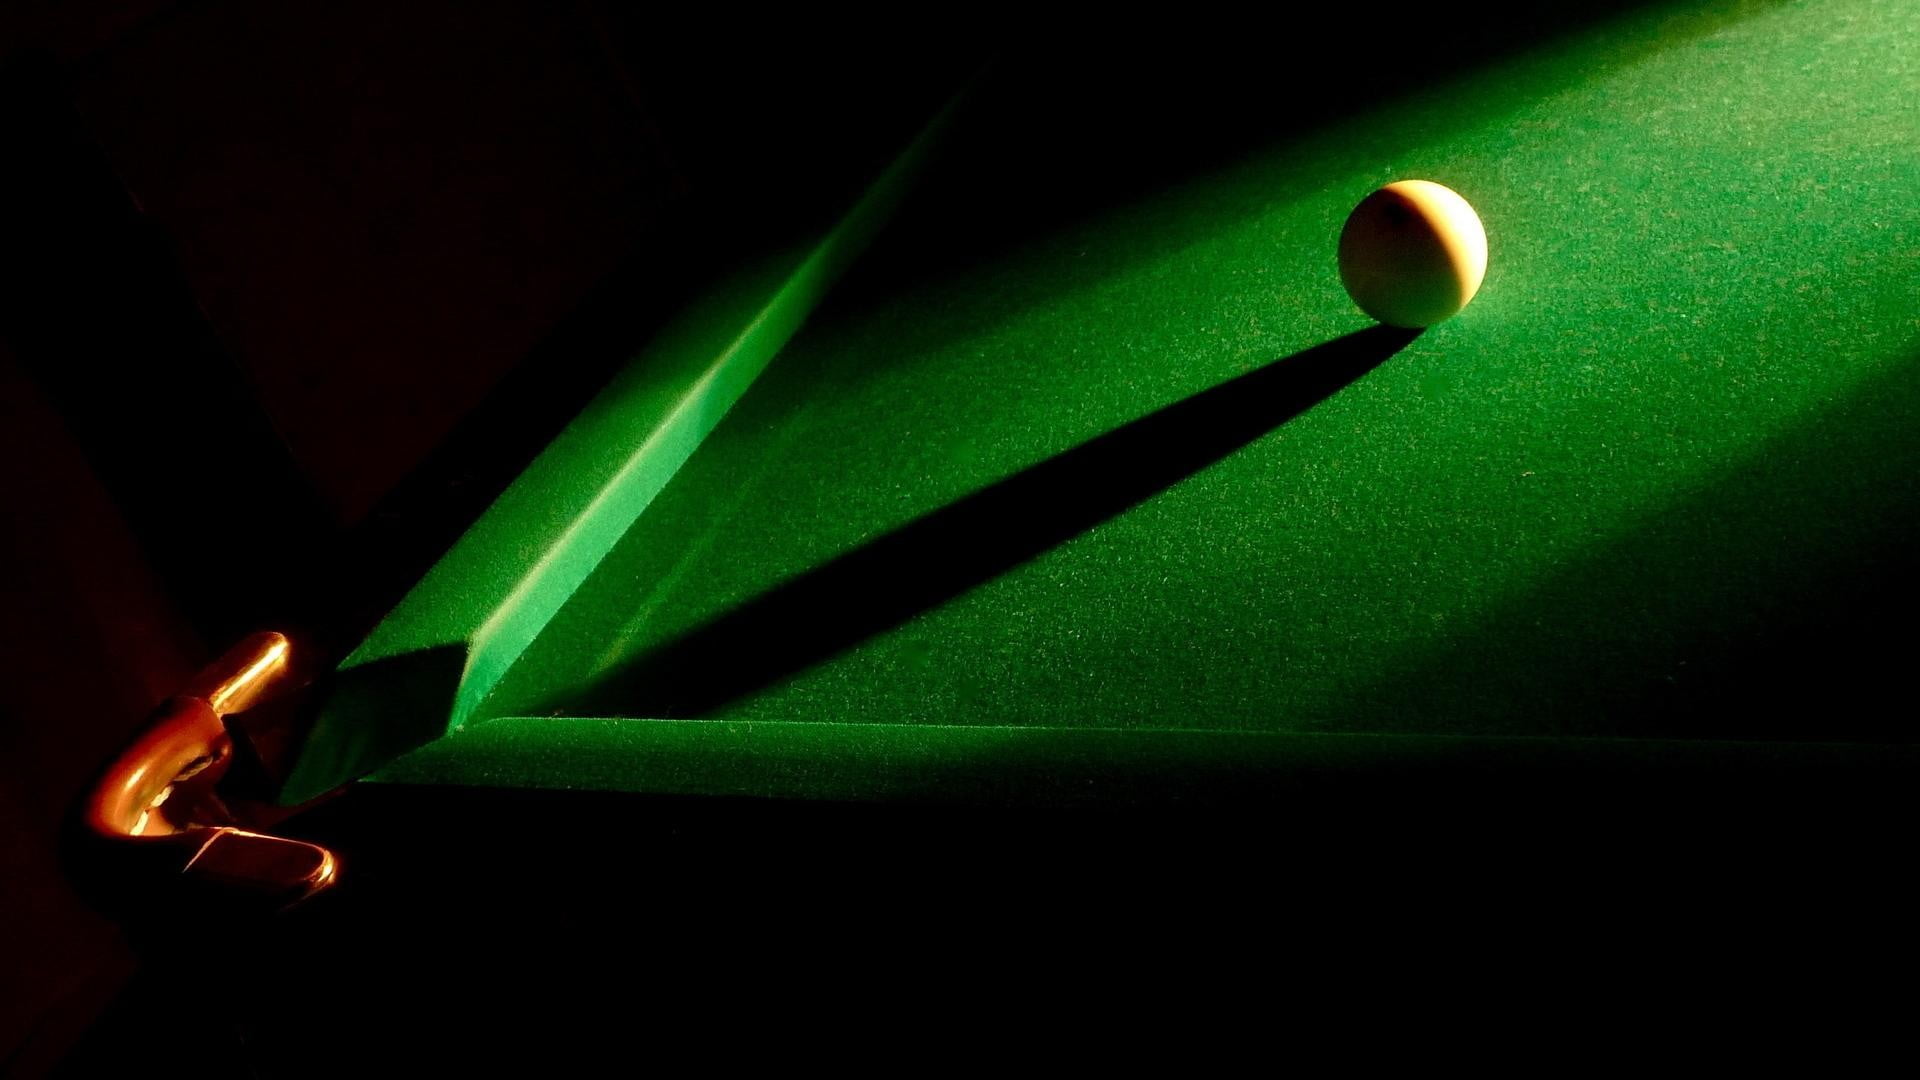 green and brown billiard table, Snooker, sports, balls, billiard balls